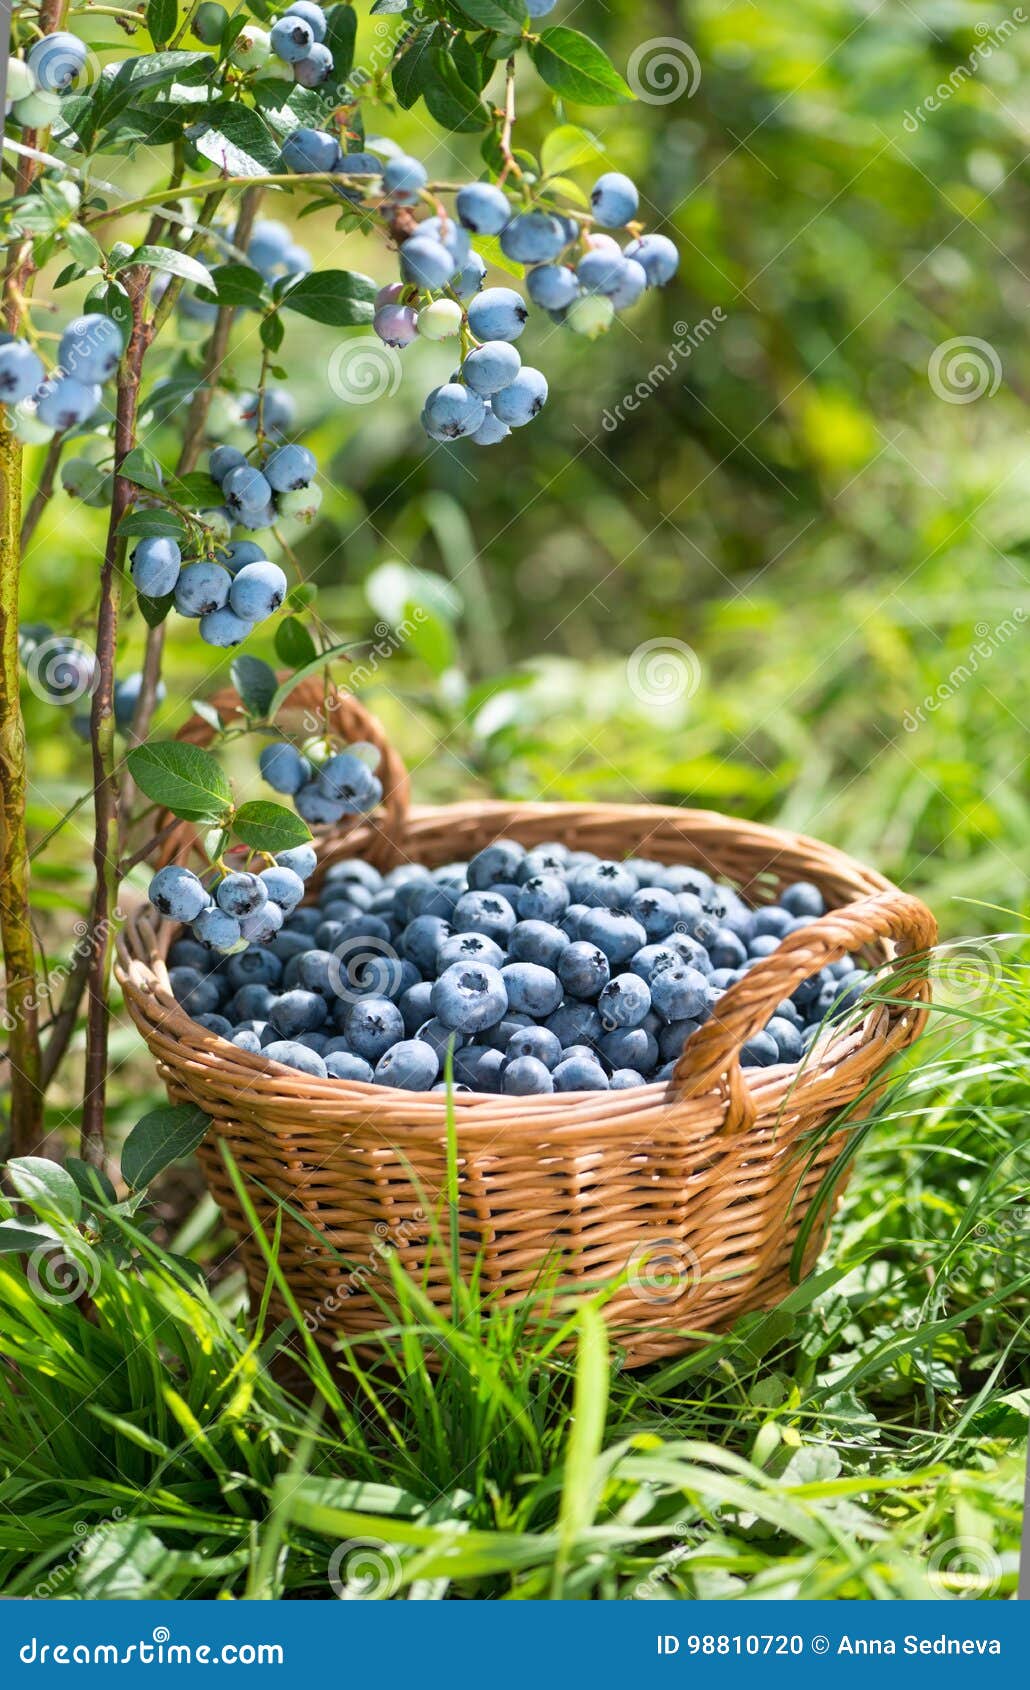 ripe bilberries in wicker basket. green grass and blueberry bush